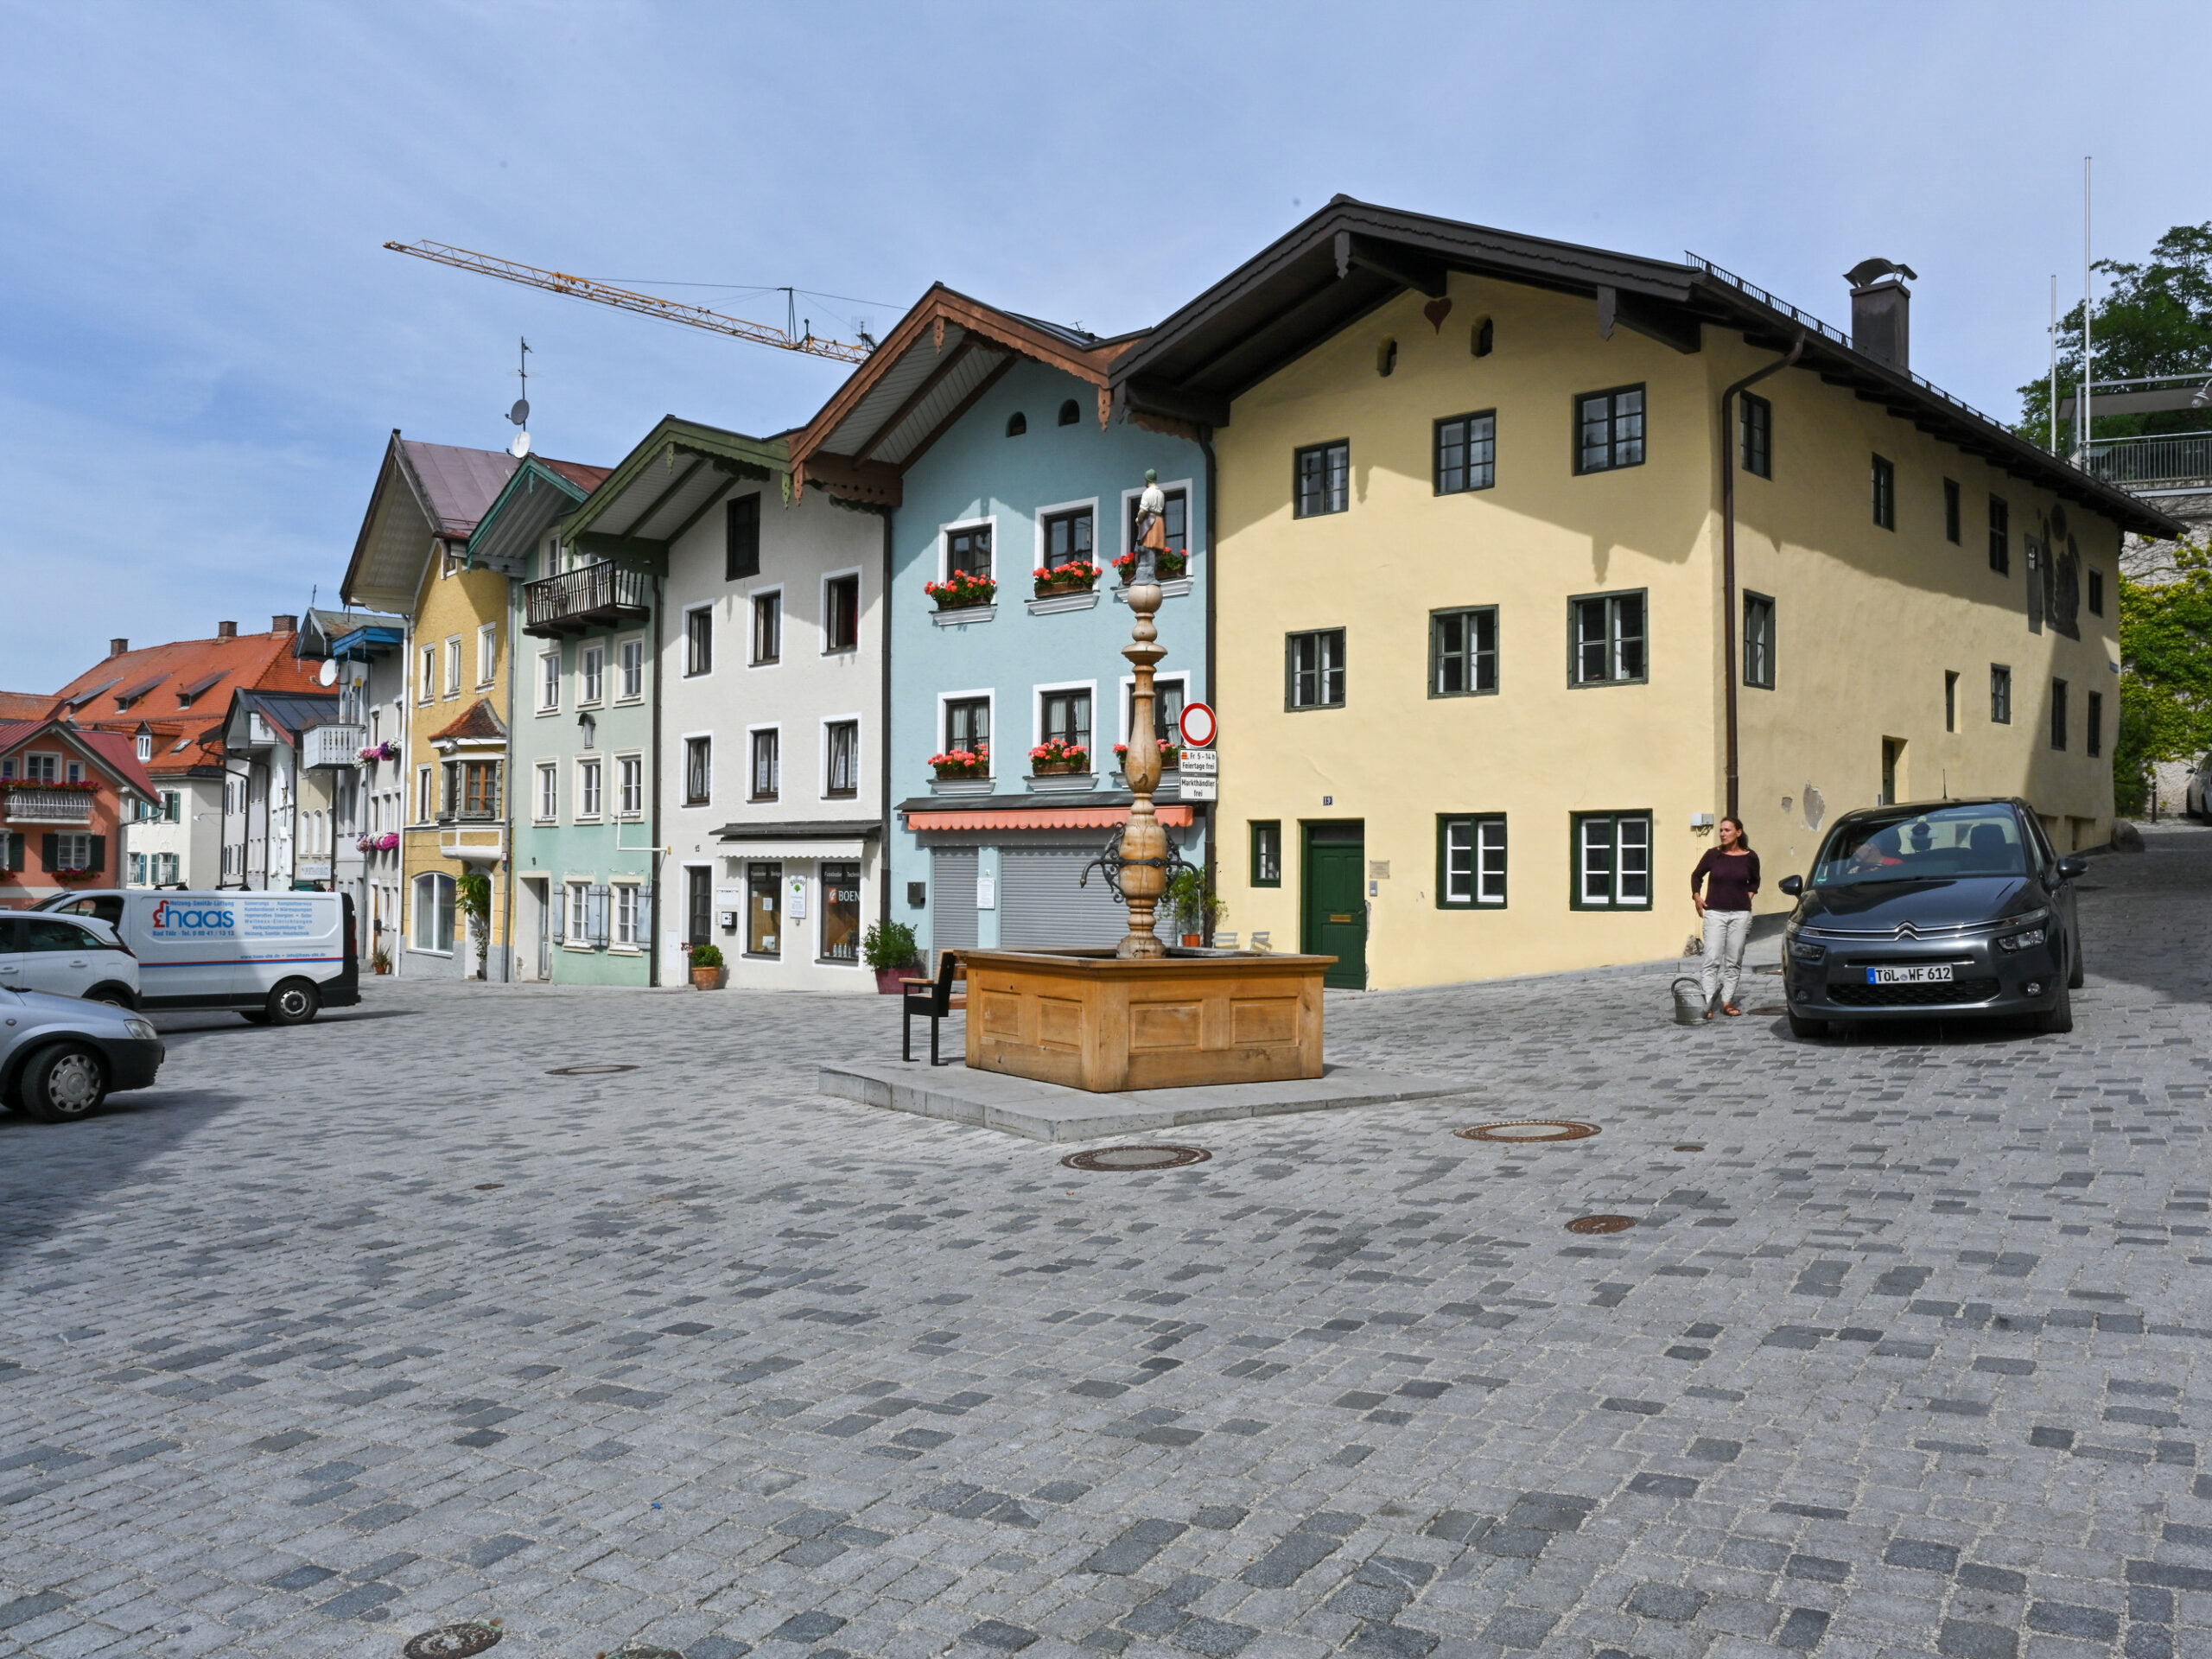 Bad Tölz | Old town district